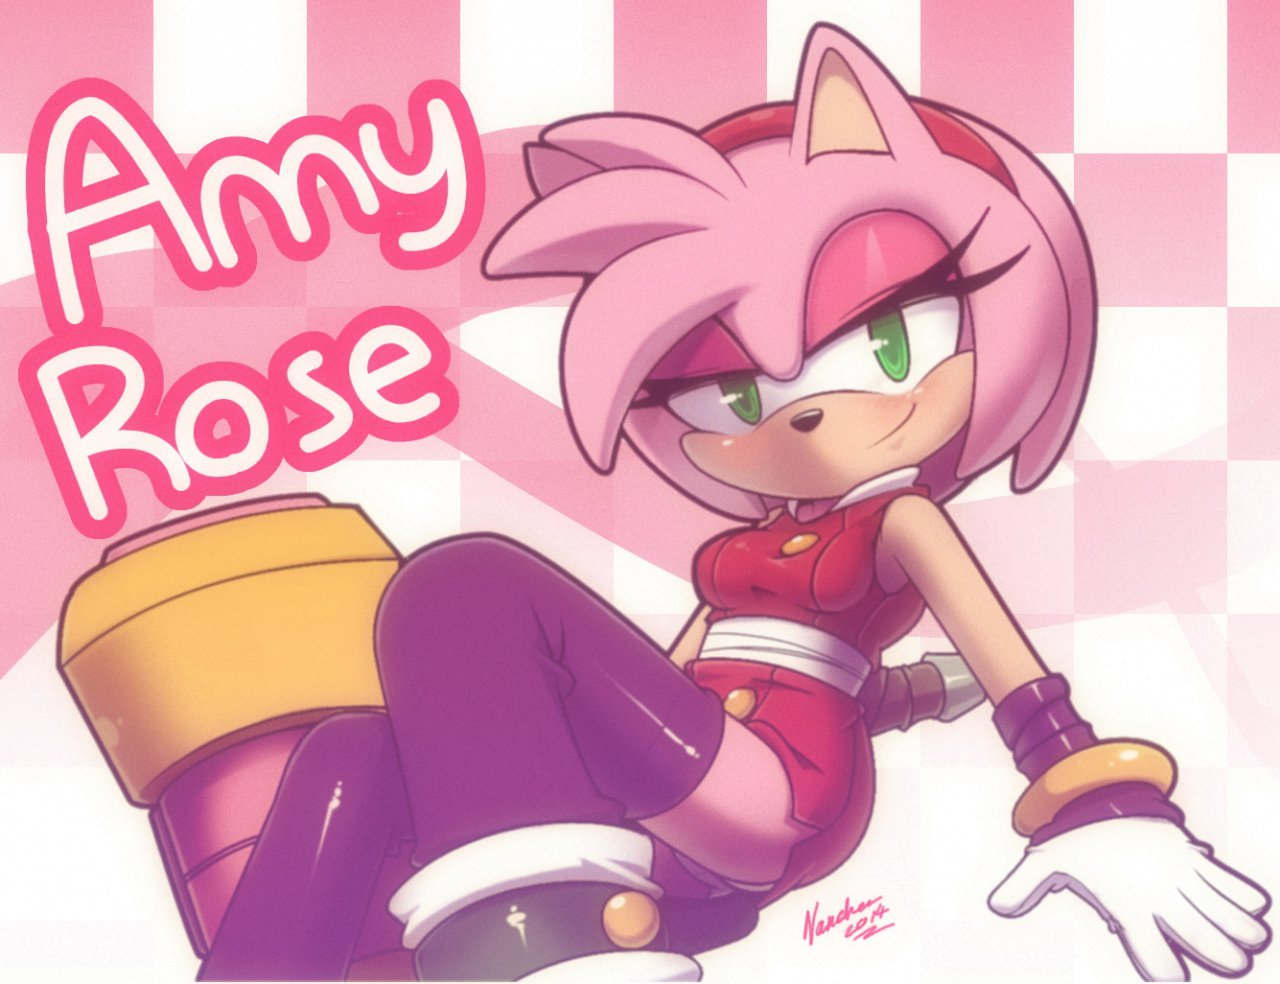 Amy Rose Sonic